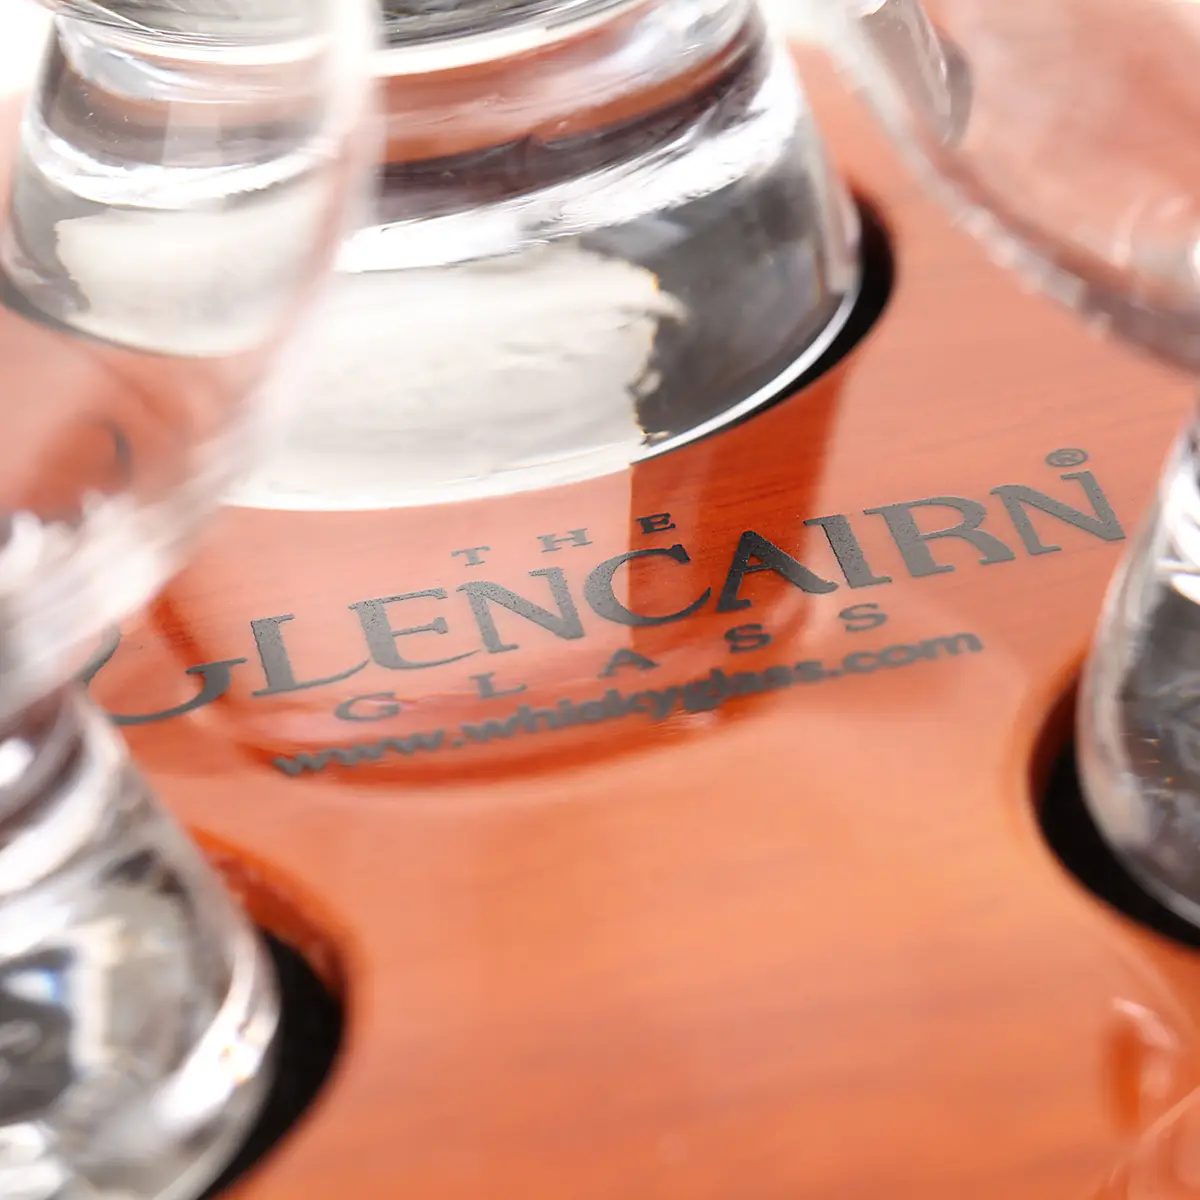 Glencairn Flight Tray Tasting Set - 2 Whisky Gläser & Wasserkrug mit Eichentablett